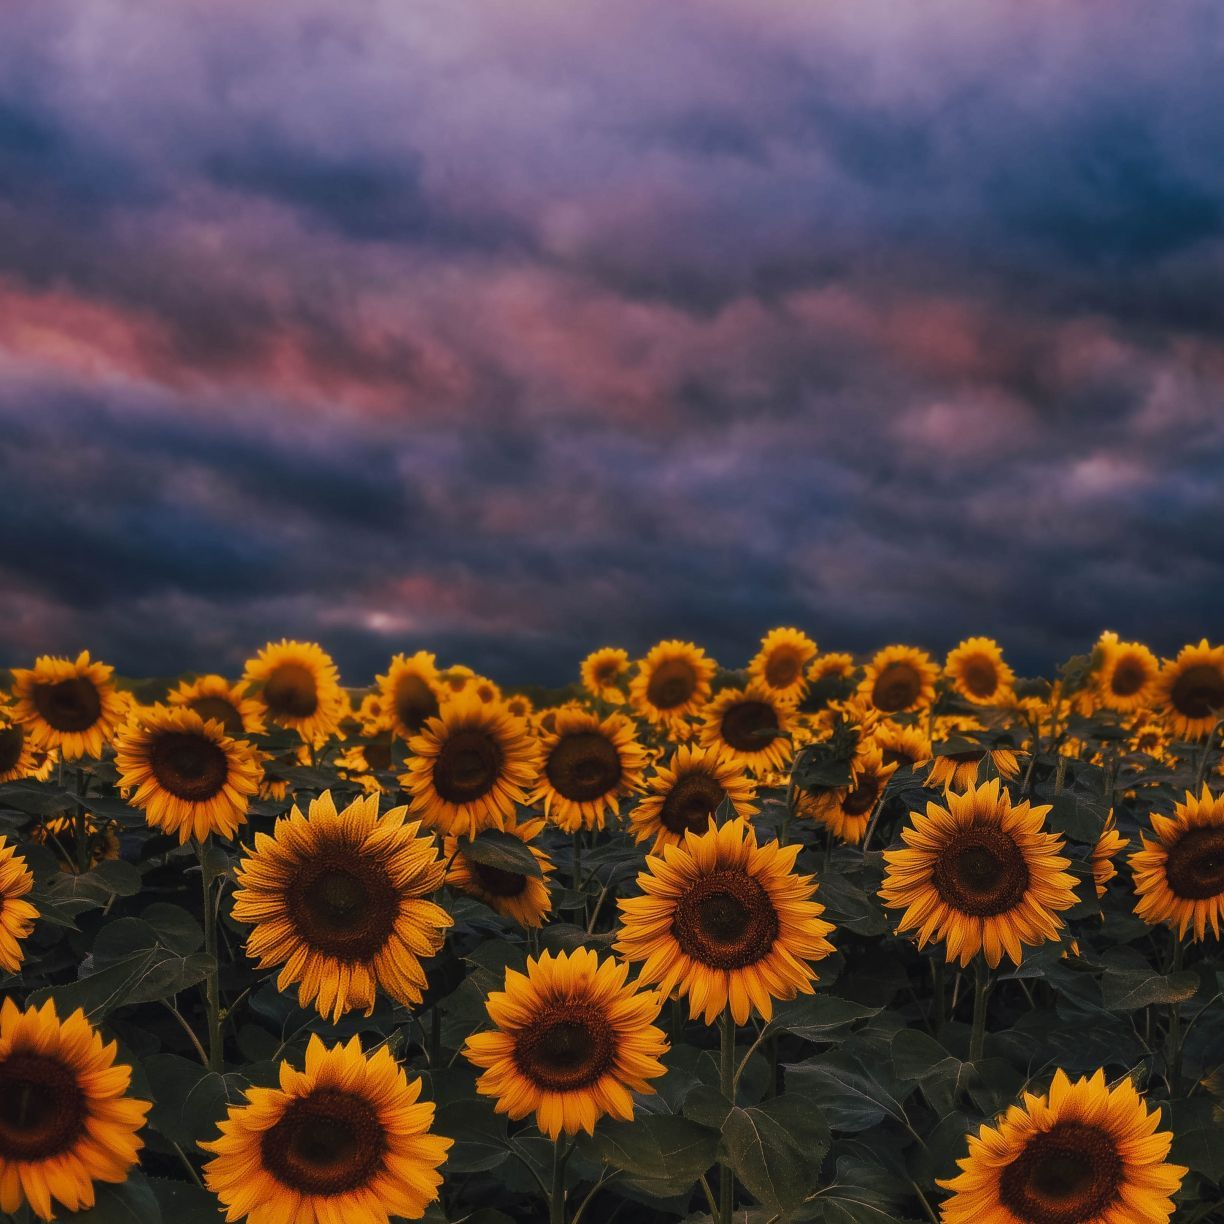 Wallpaper sunflower farm, sunset, cloudy day desktop wallpaper, HD image, picture, background, 18096e